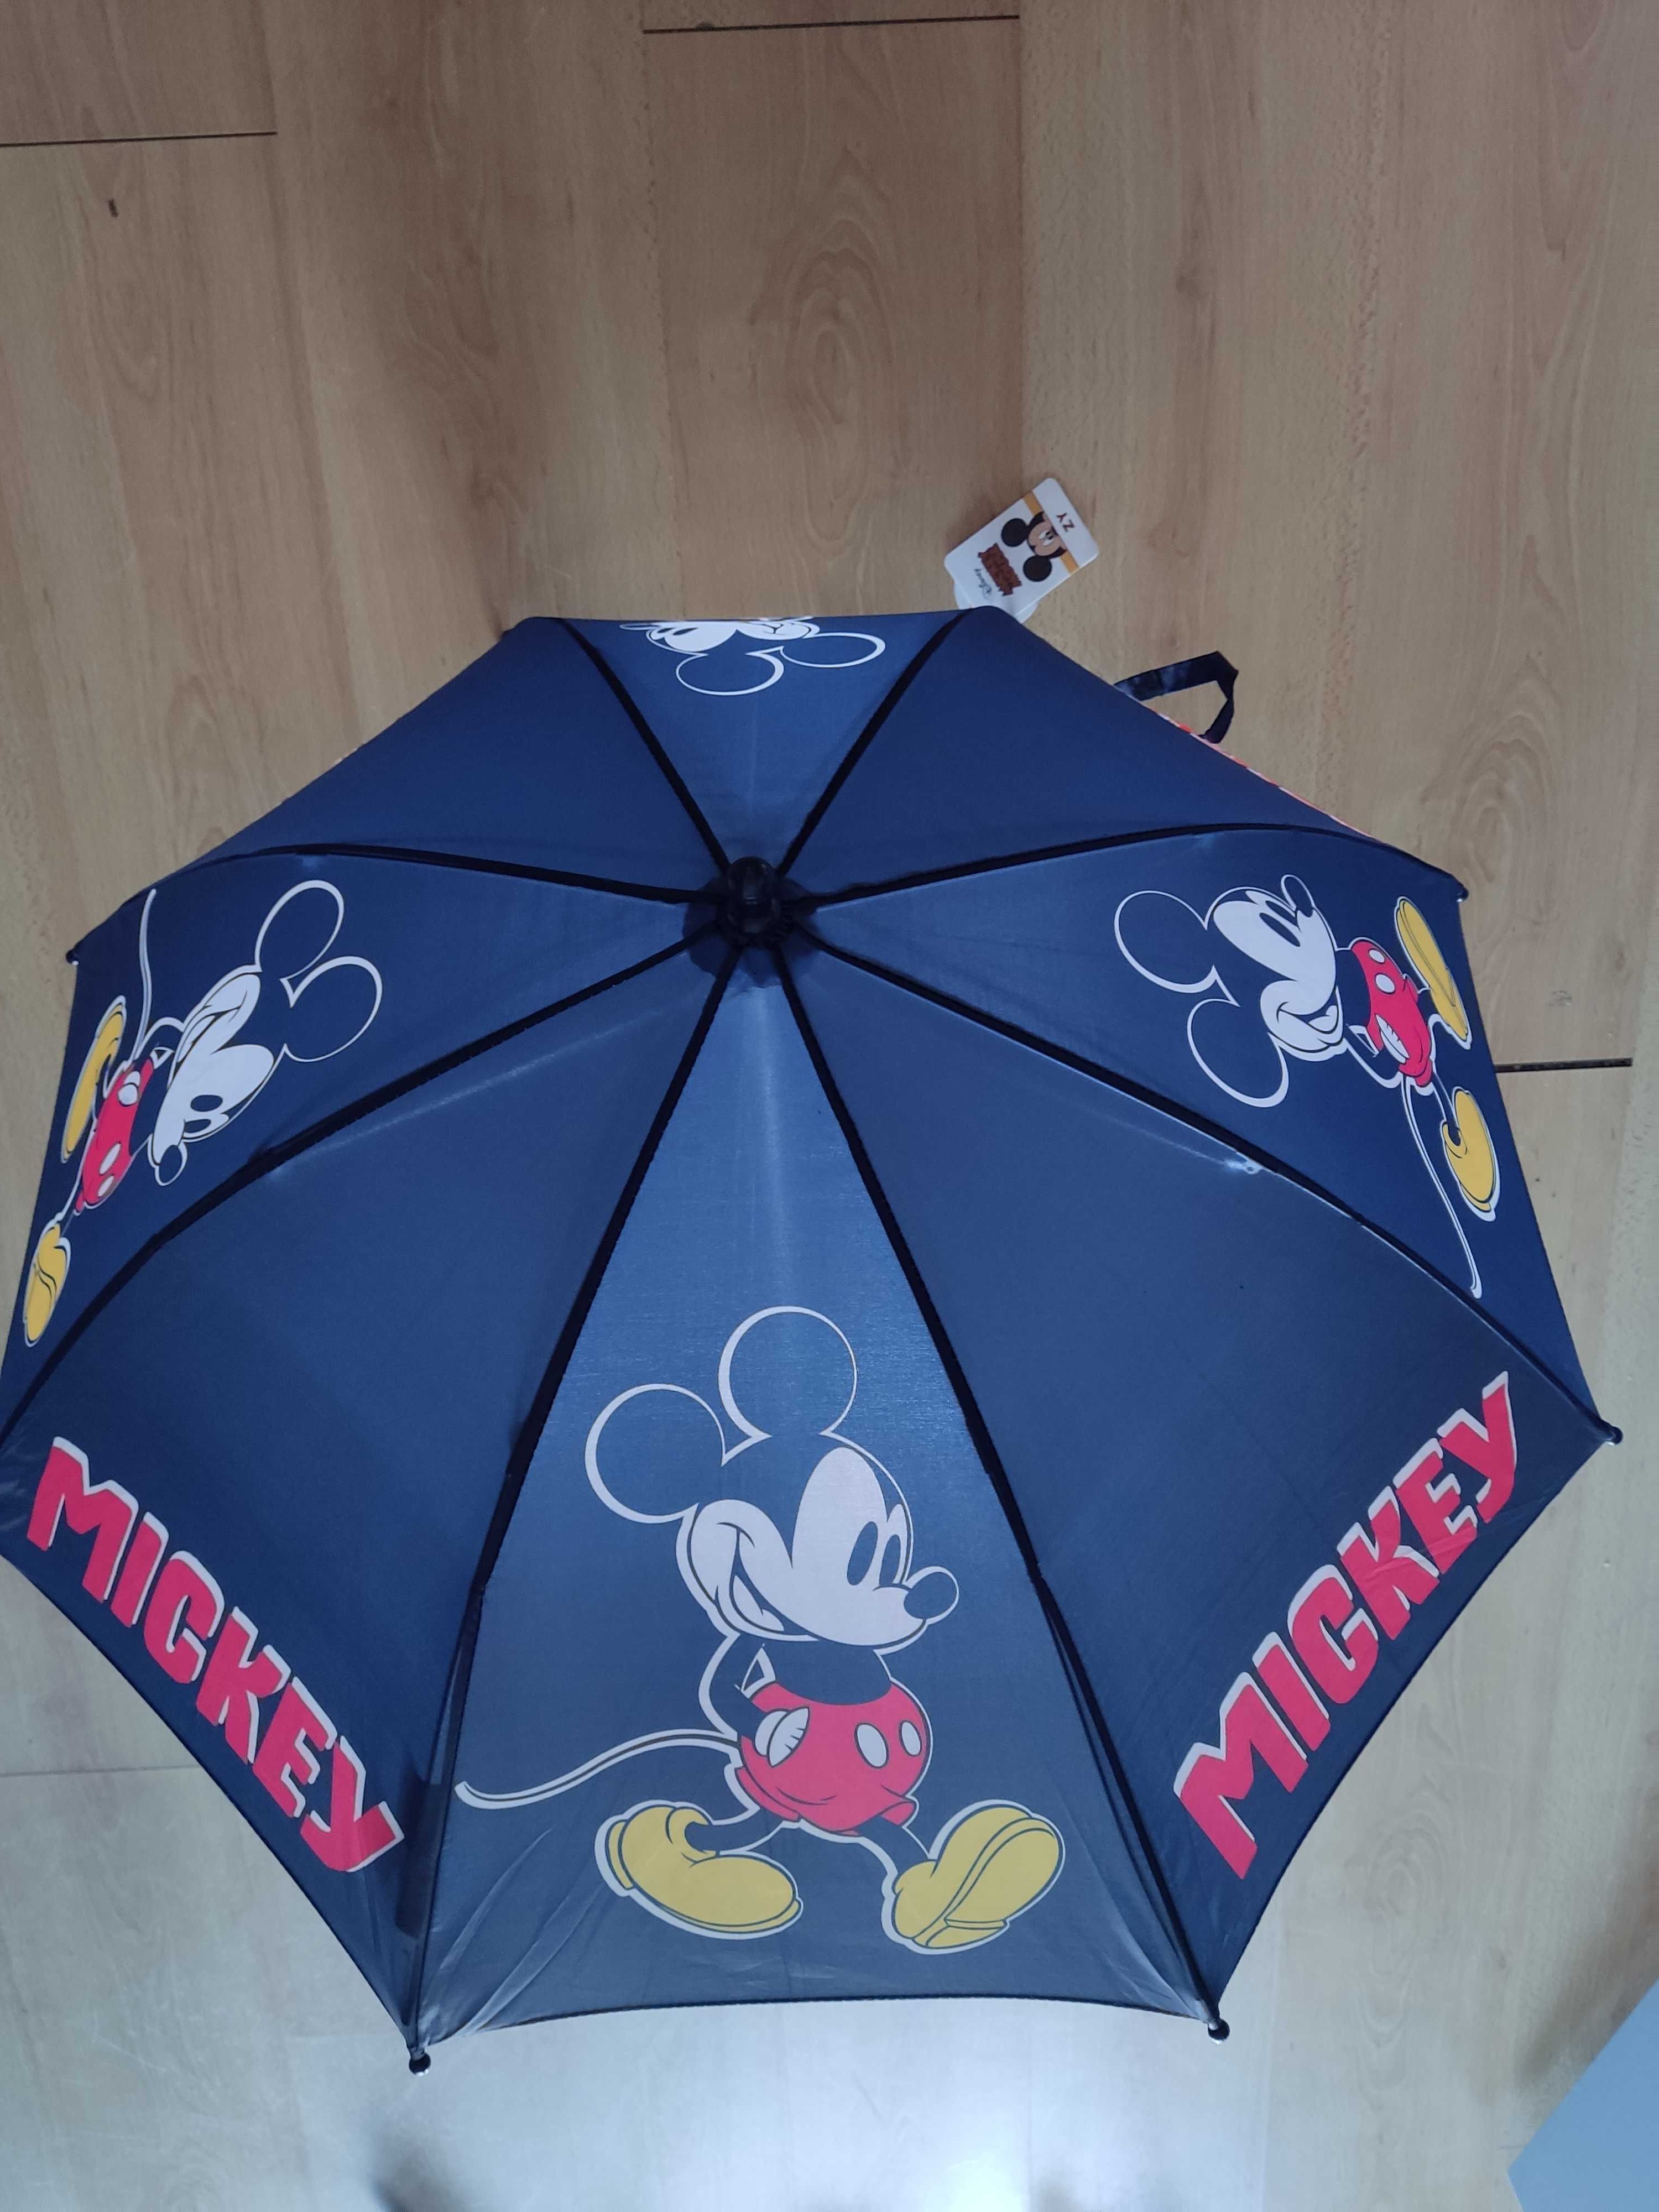 Guarda Chuva Mickey Mouse com portes de envio incluídos